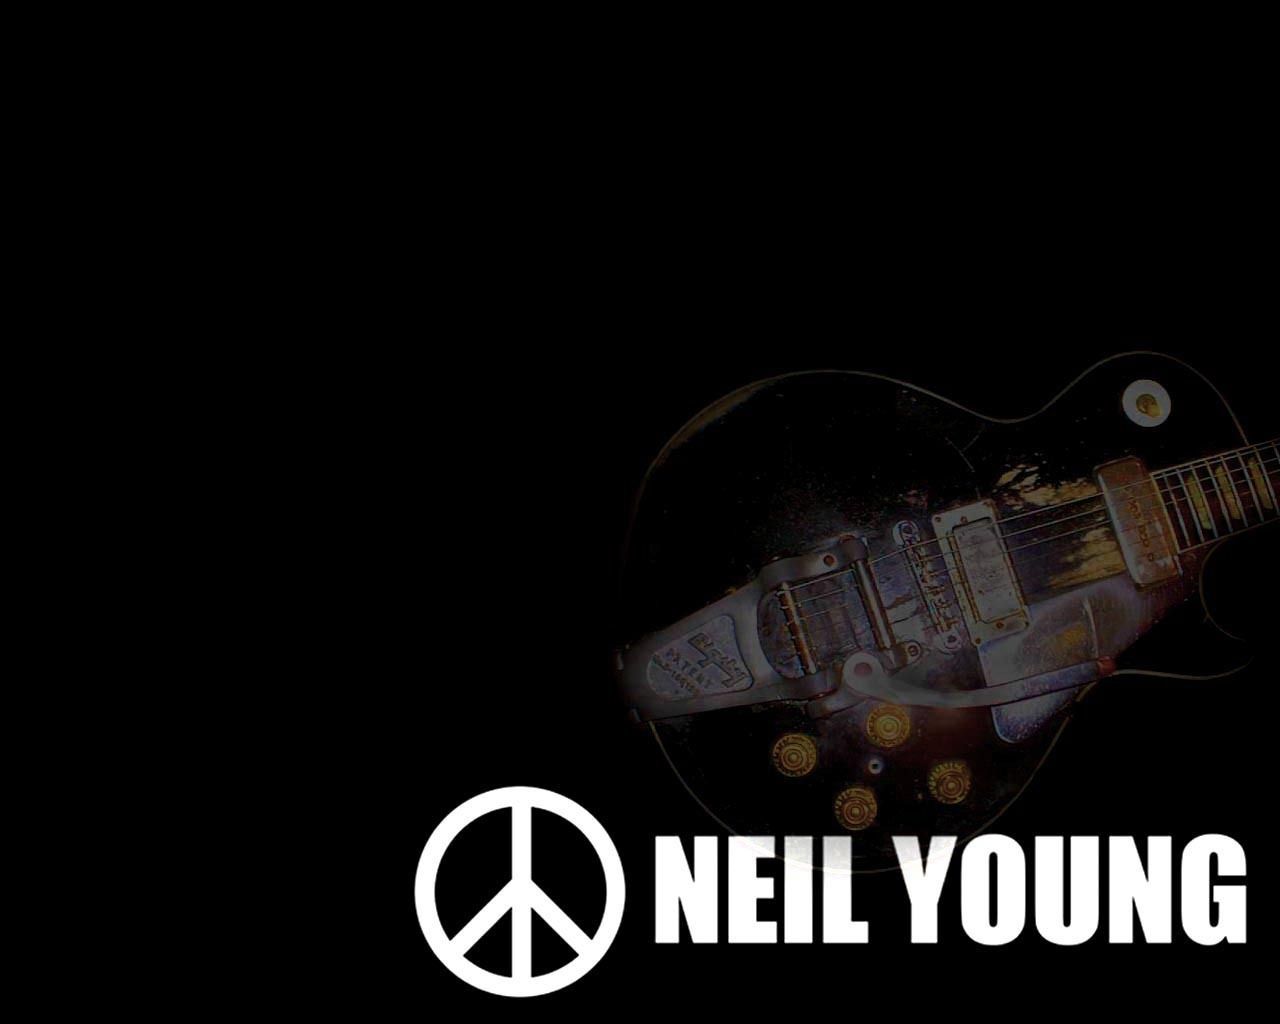 Neil Young - Neil Young Wallpaper 910281 - Fanpop